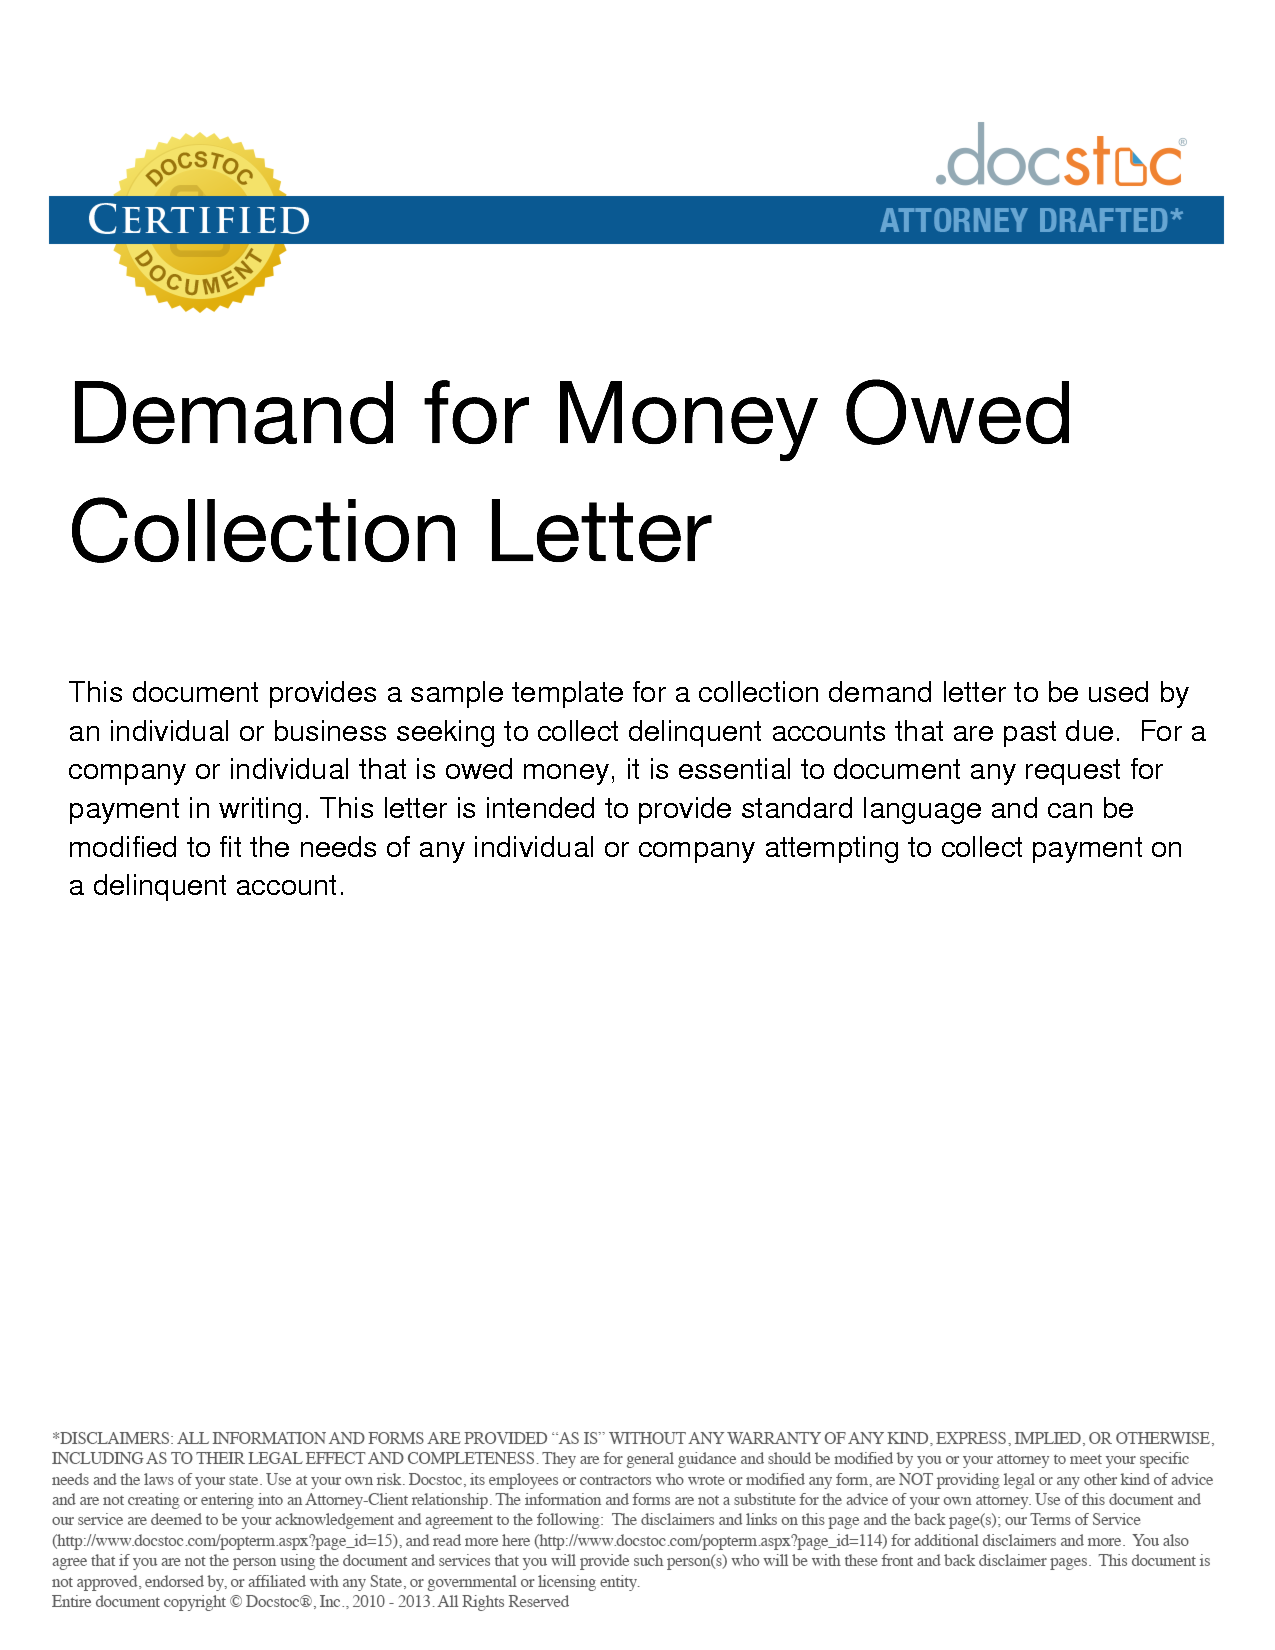 Demand Letter Template for Owed Money Claim Your Money | Rocket 